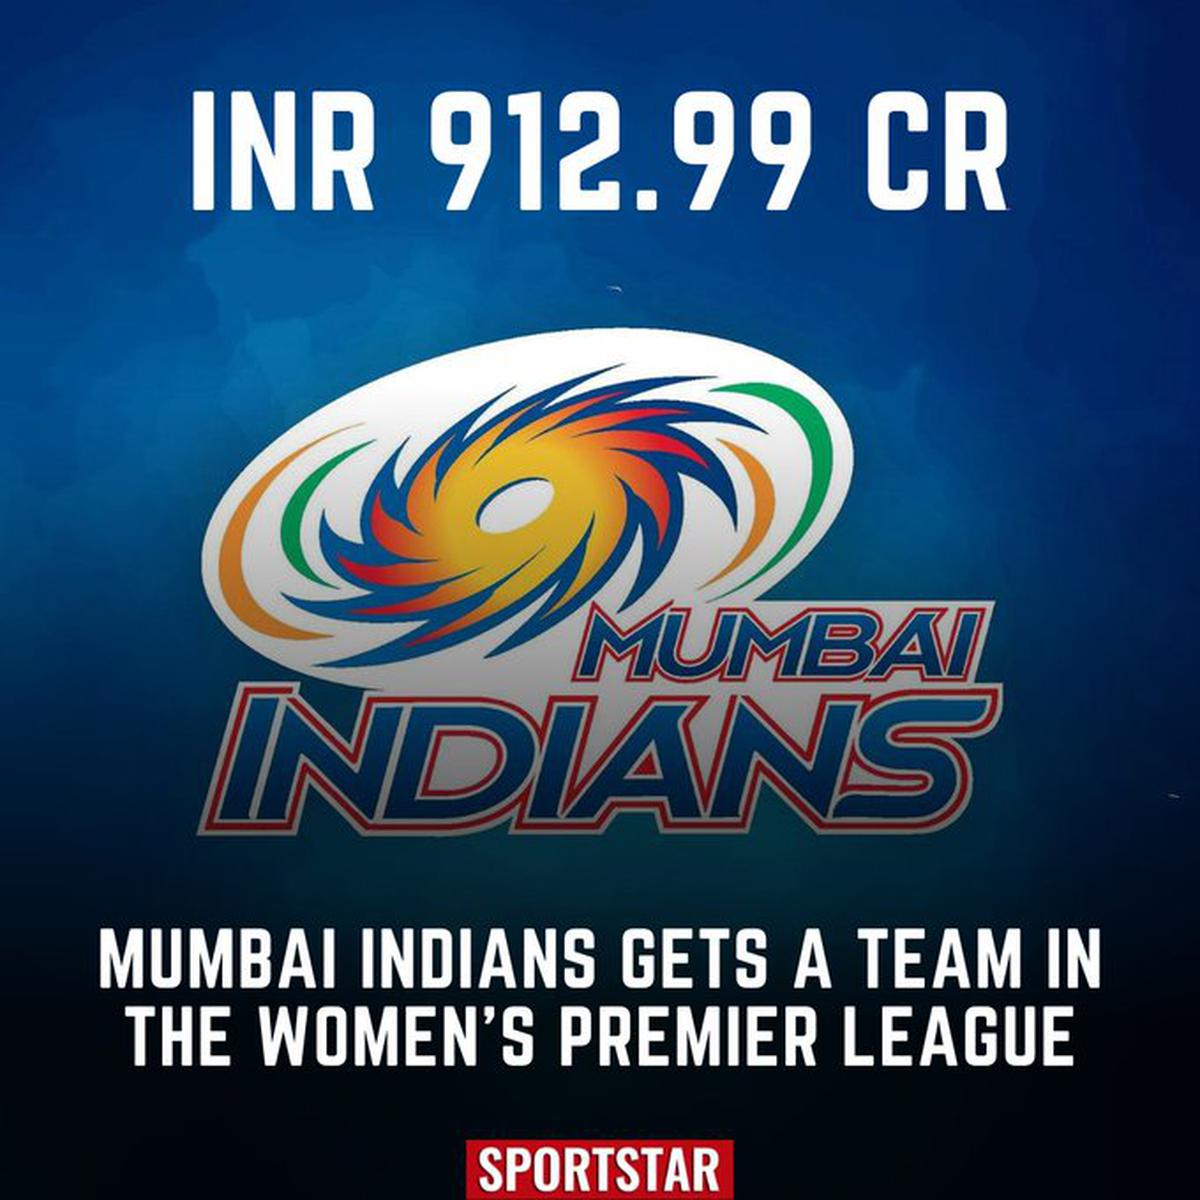 IPL unveils new logo featuring title sponsor Dream11 for the upcoming  edition - IPL ने जारी किया नया लोगो ड्रीम11 आईपीएल, मुंबई इंडियंस ने शेयर  की तस्वीर, Cricket News - Hindustan